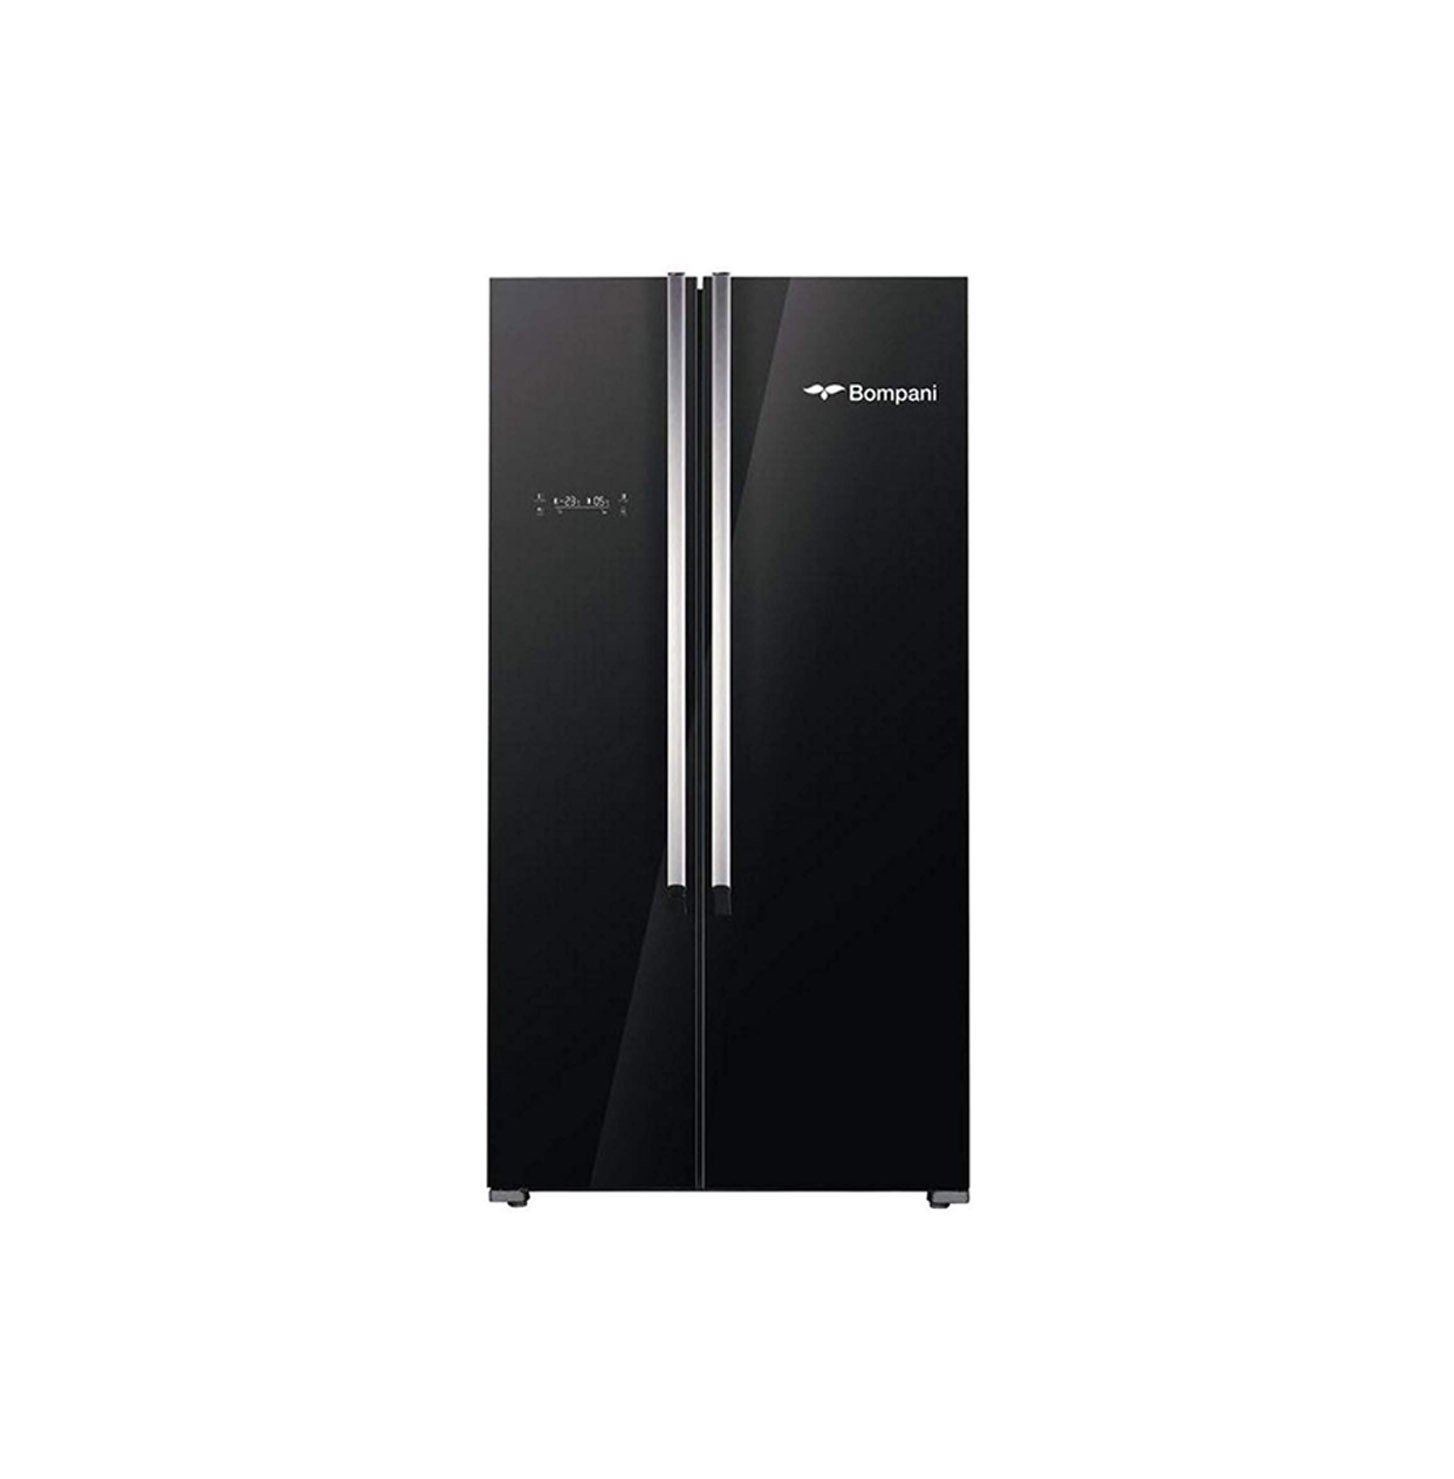 Bompani 600 Liters Side By Side Refrigerator, Black Model – BRS-600 | 1 Year Full 5 Years Compressor Warranty